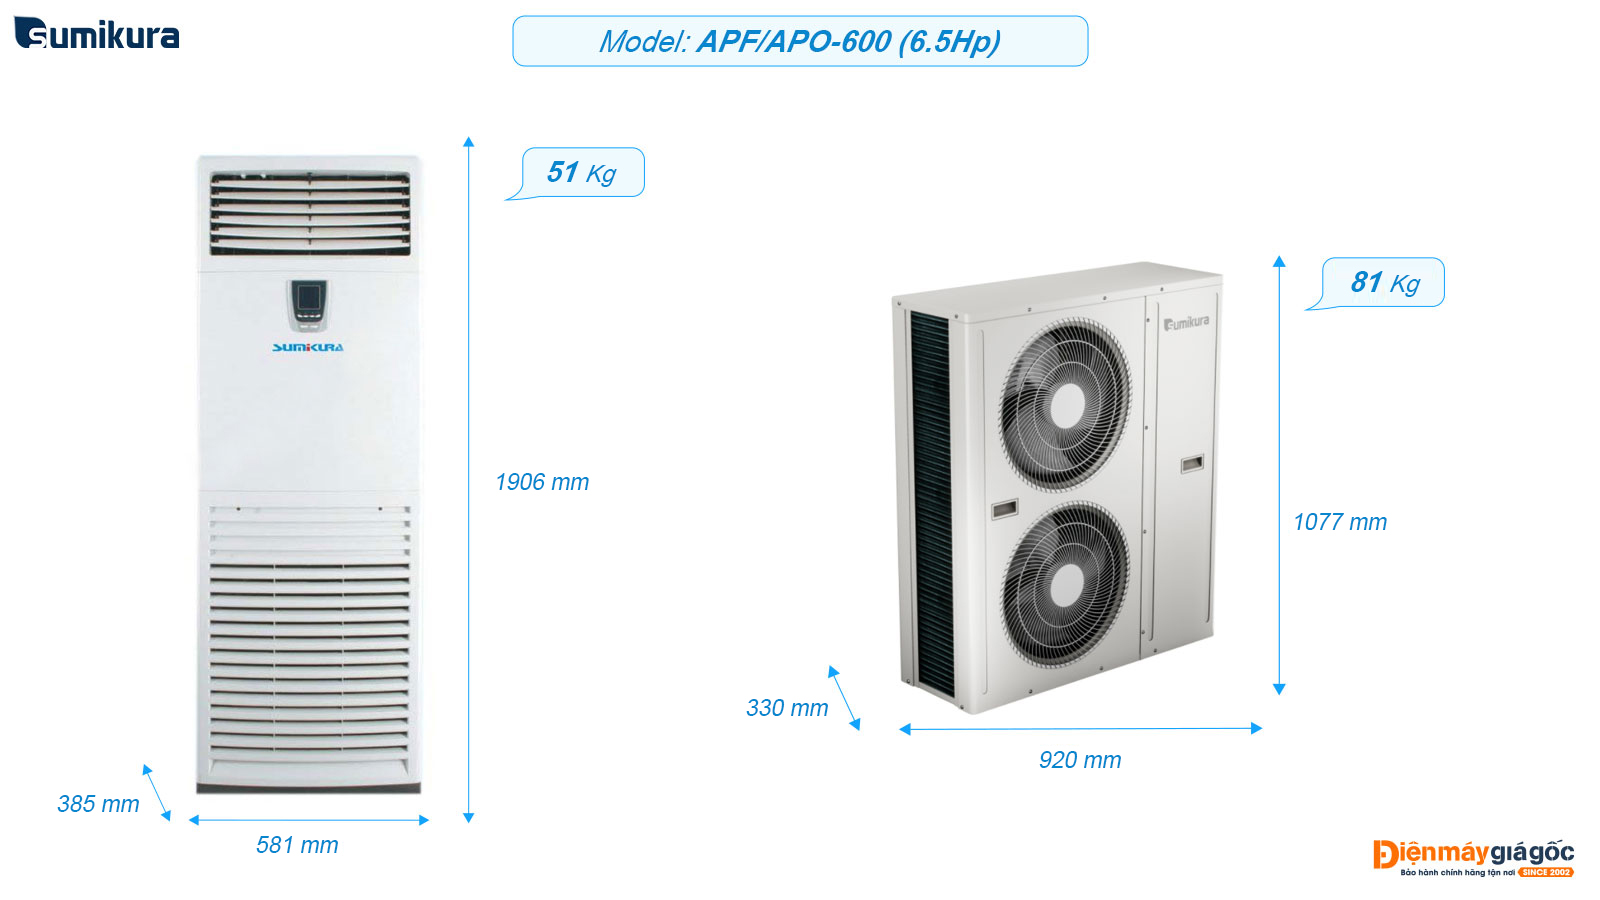 Sumikura Floor standing air conditioning APF/APO-600 (6.5Hp) - Gas R410A